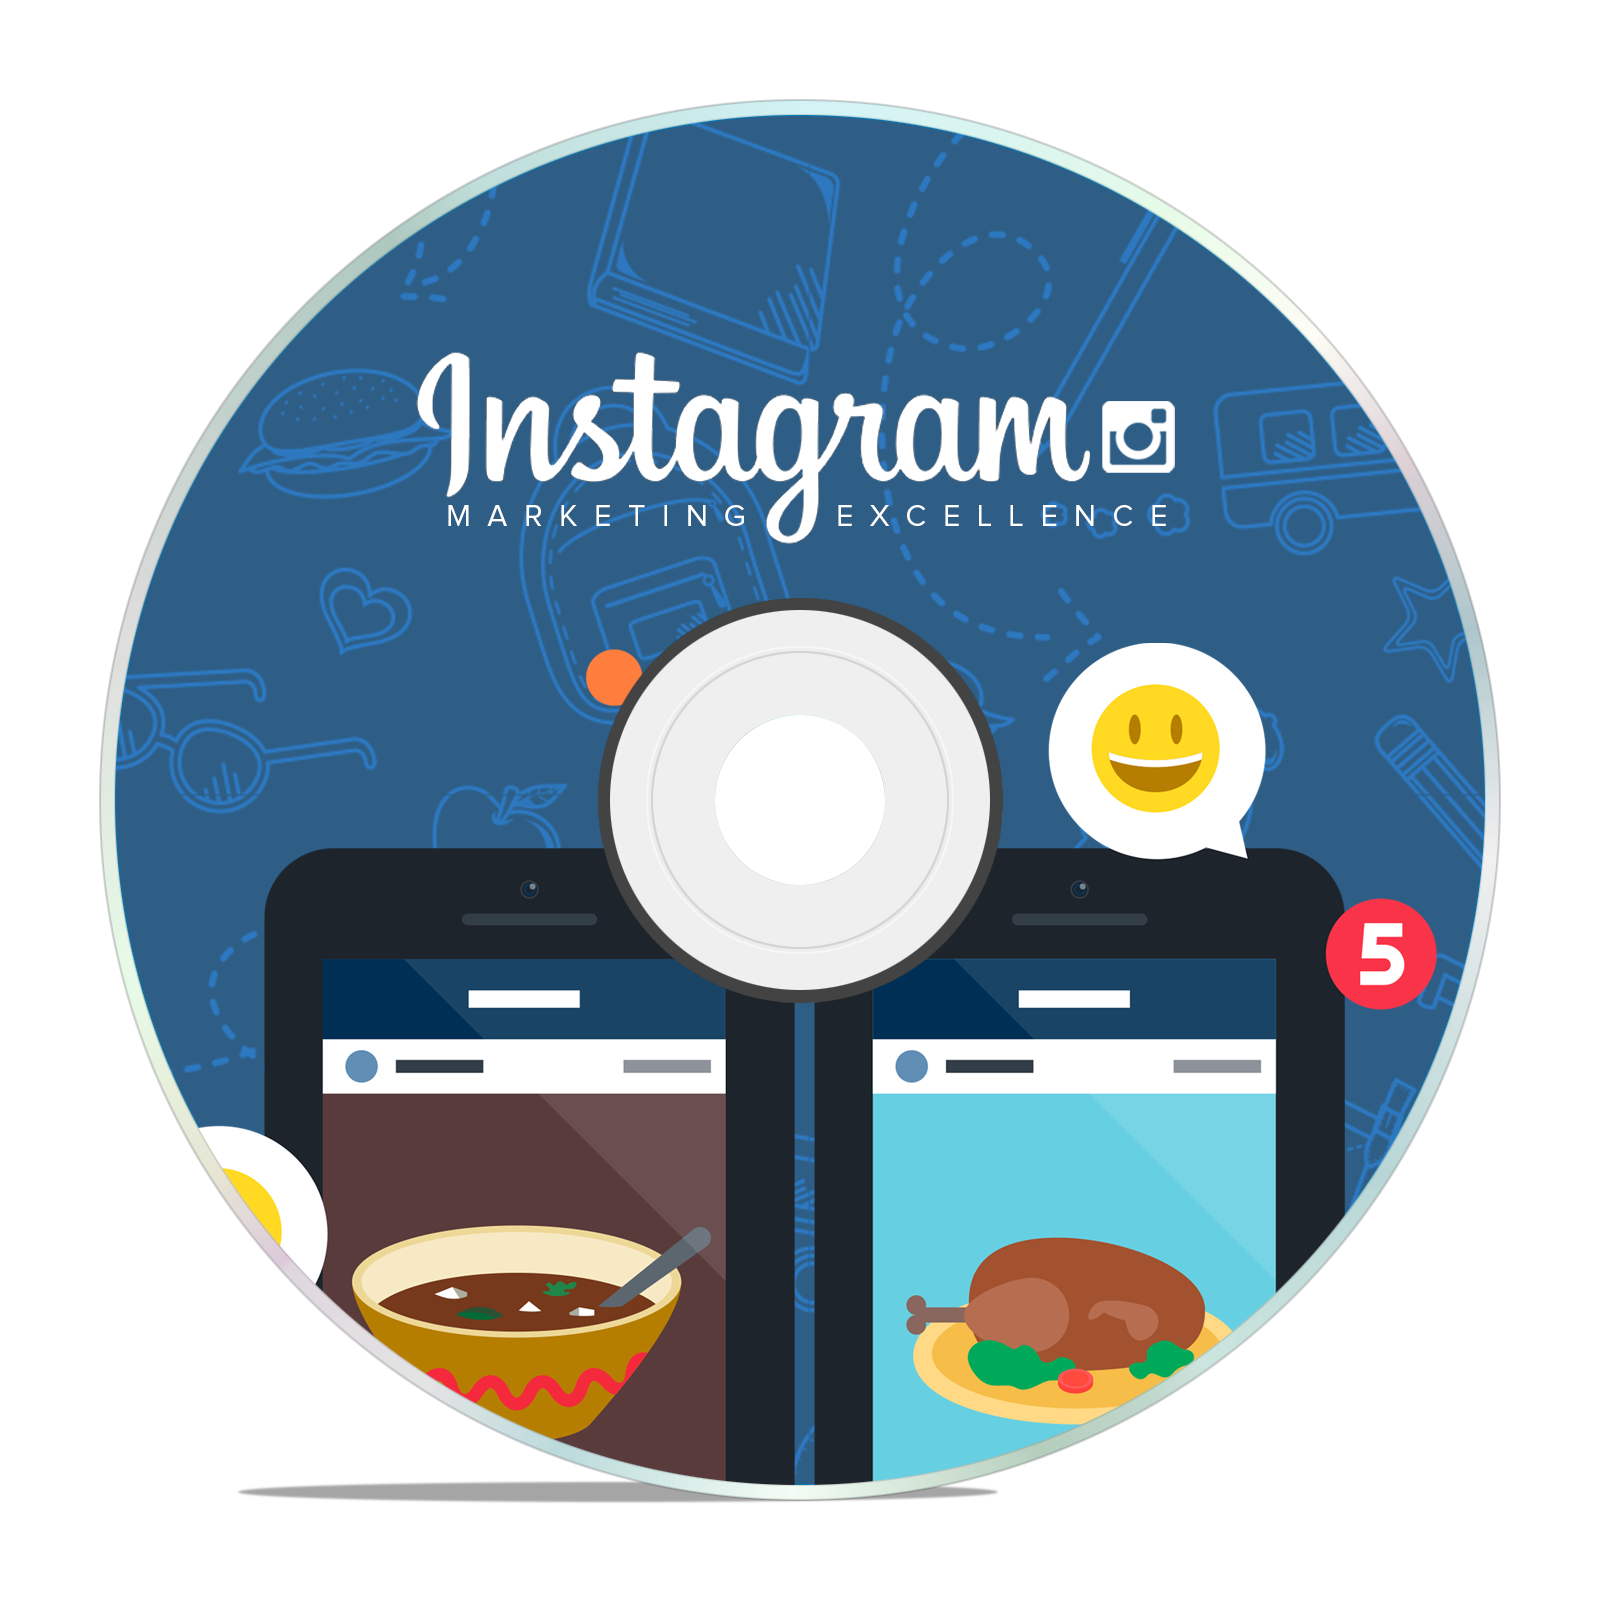 Do you use Instagram? photo